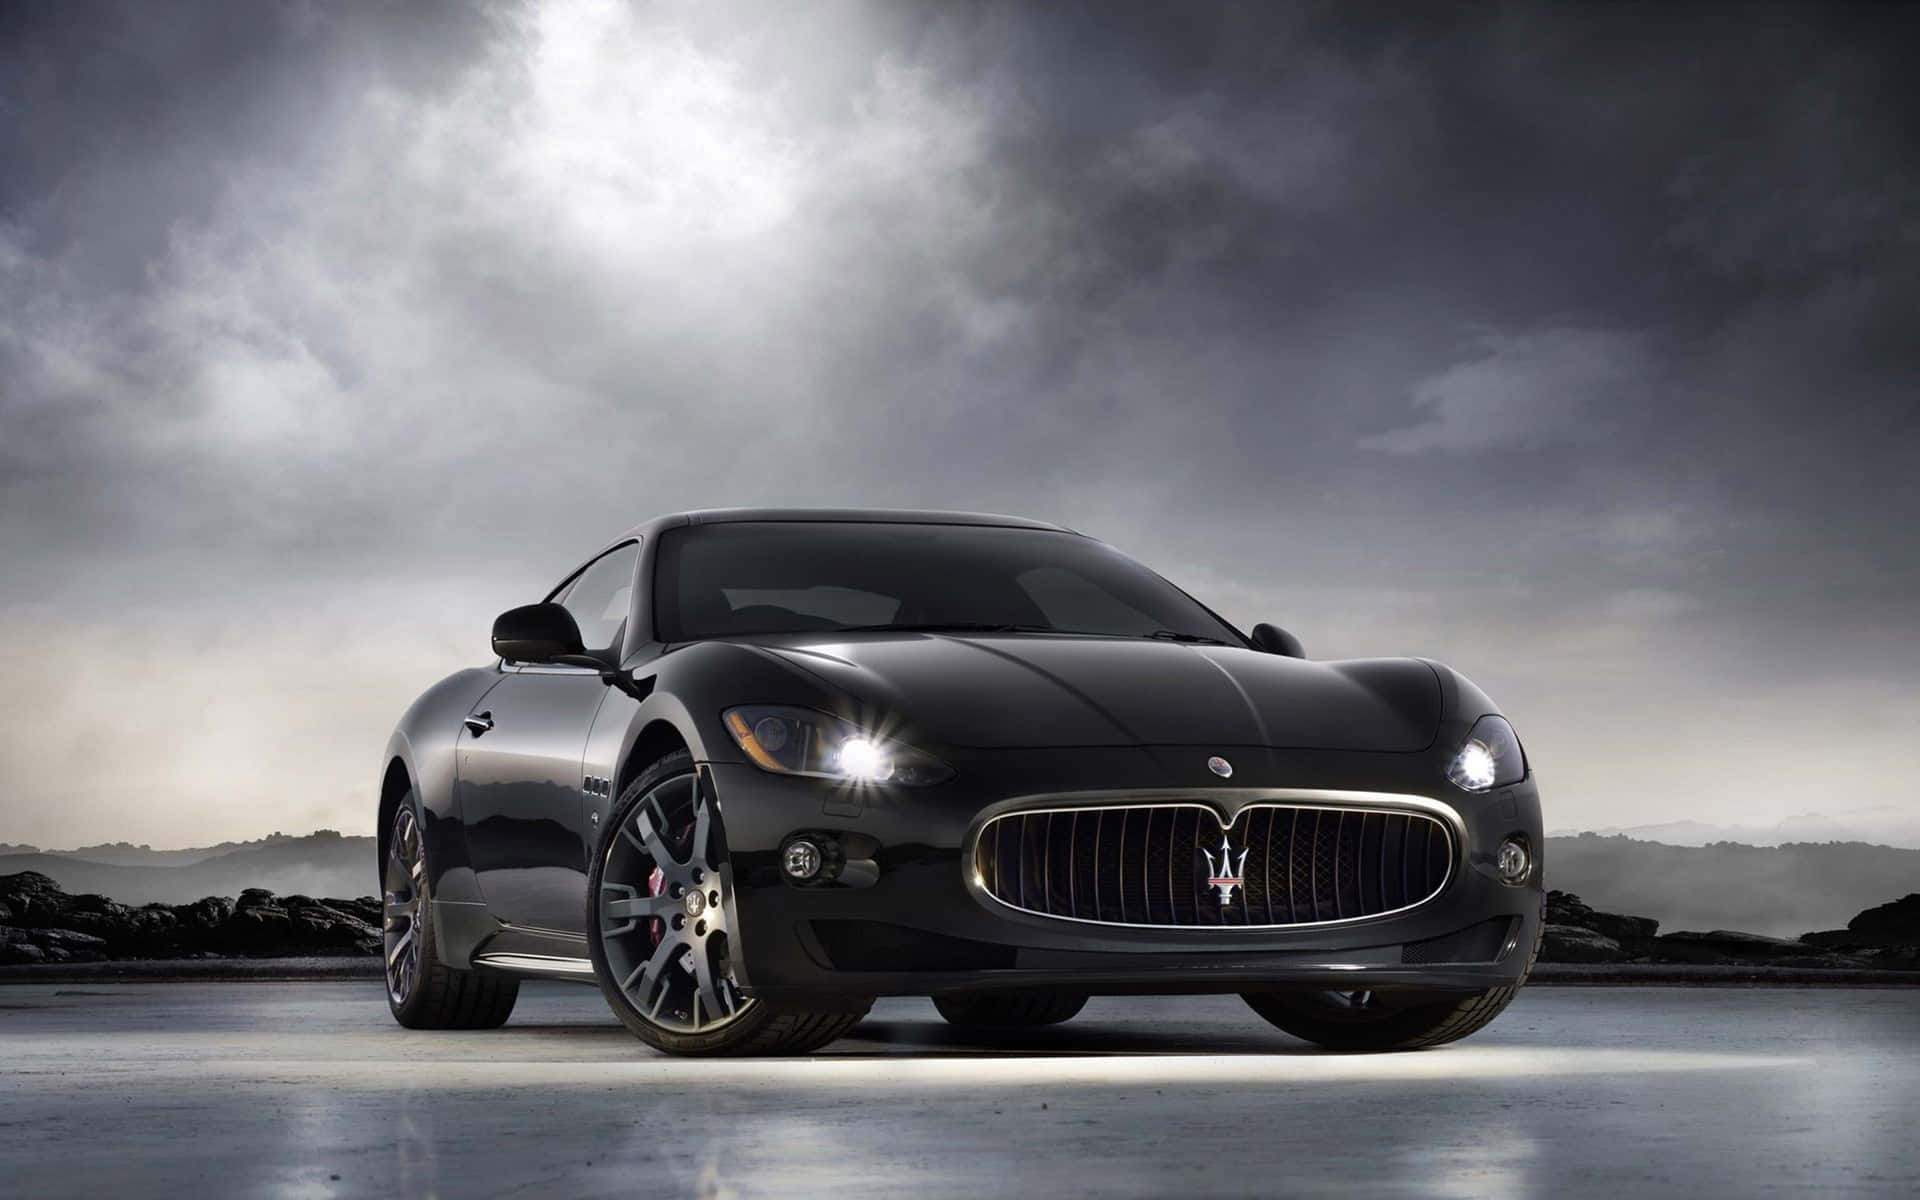 The Future of Luxury Driving - 4K Maserati Wallpaper